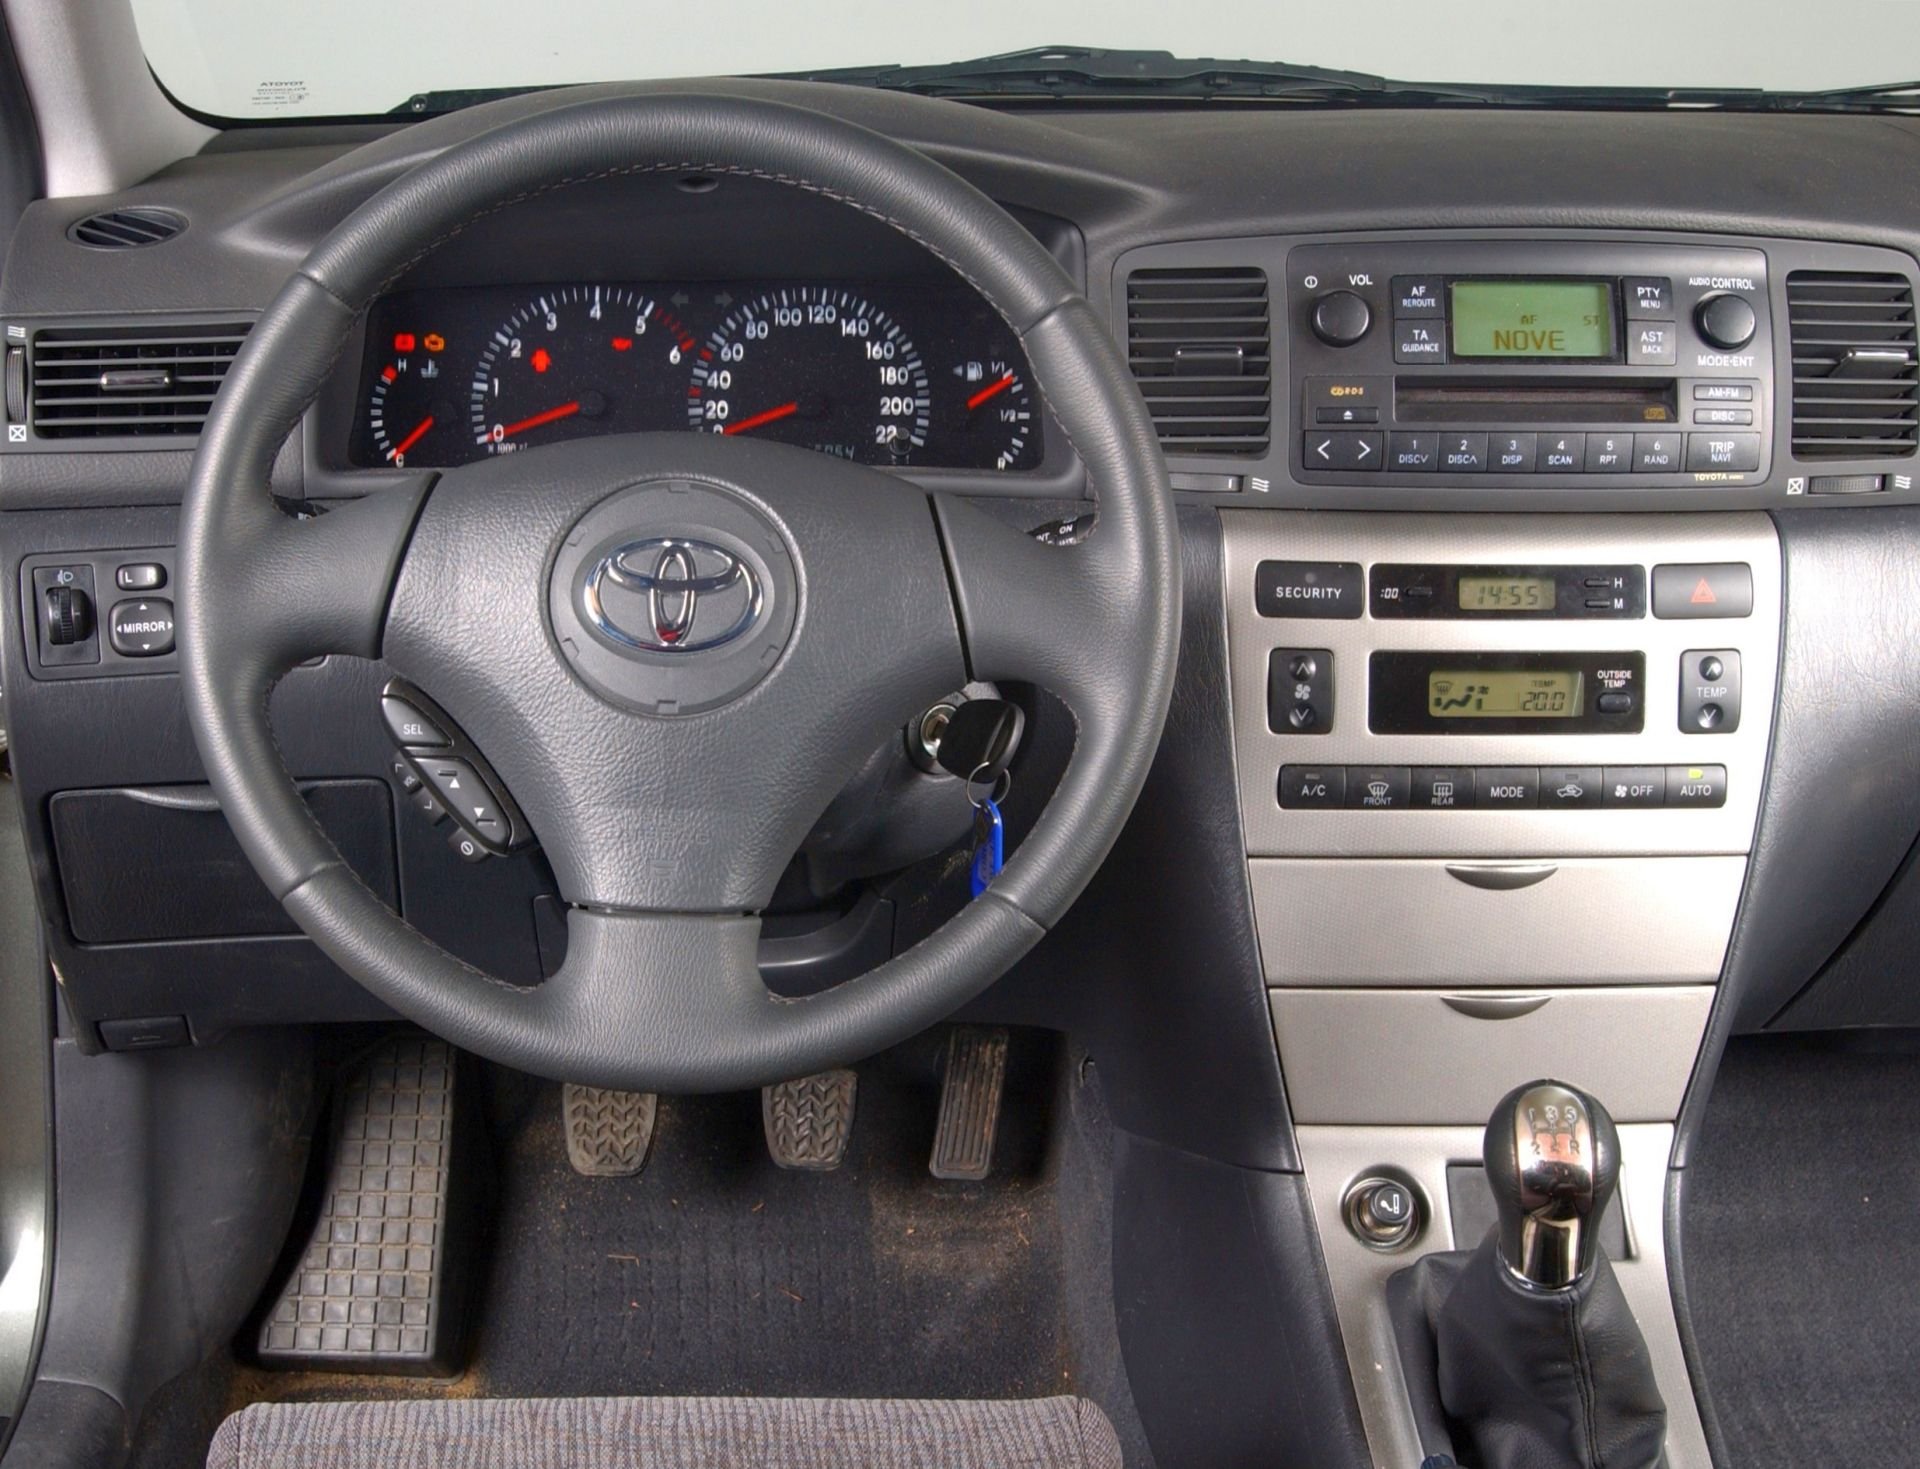 Toyota Corolla IX kokpit przedlift